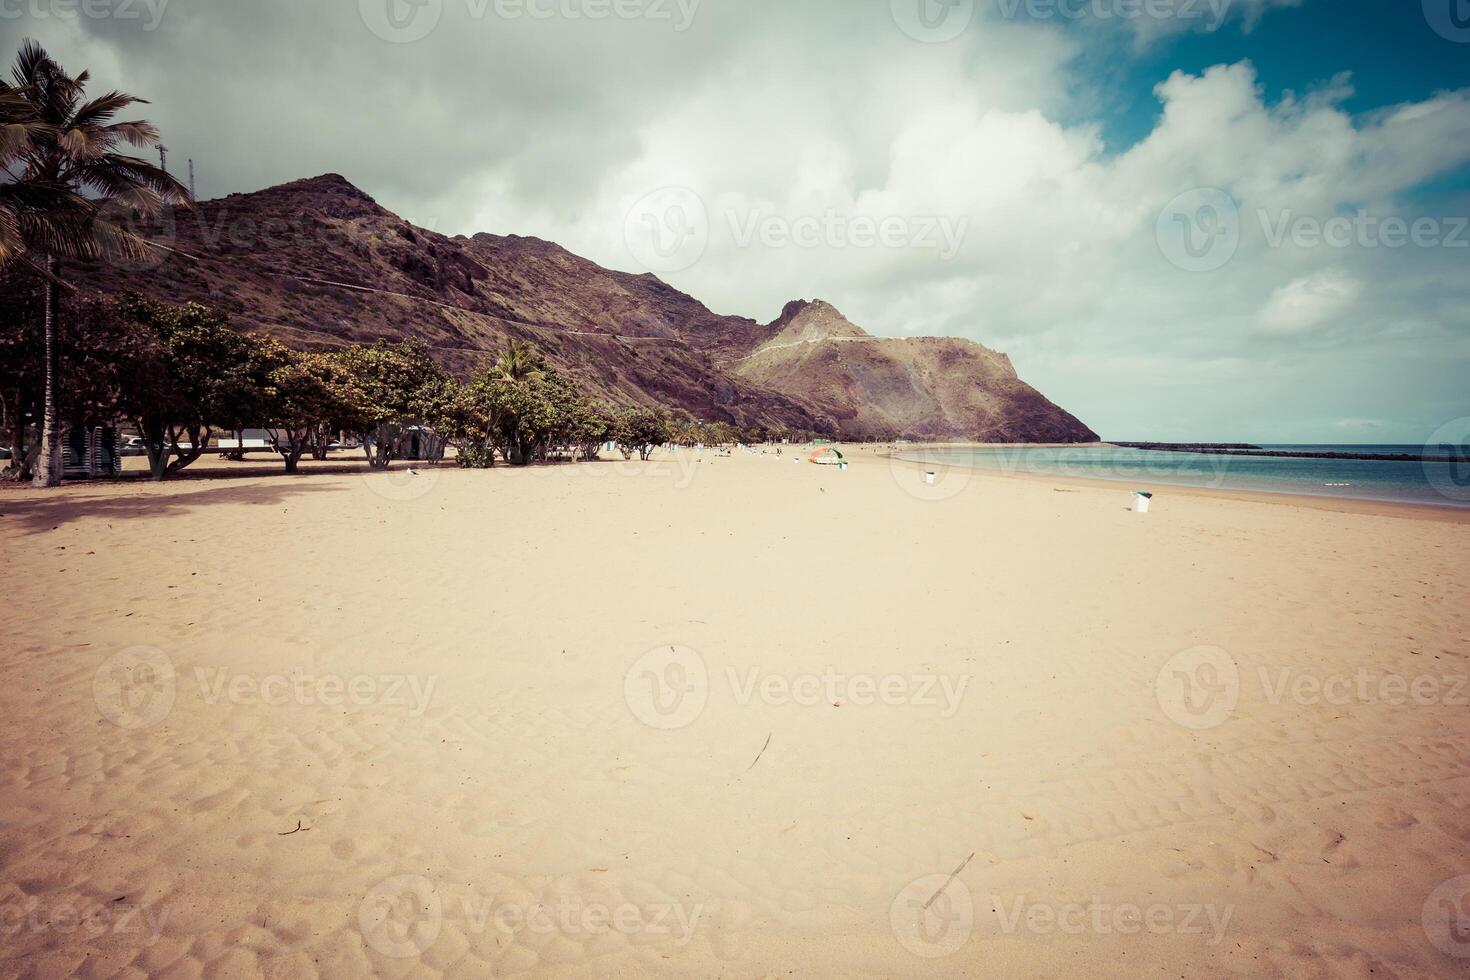 Beach Teresitas in Tenerife - Canary Islands Spain photo